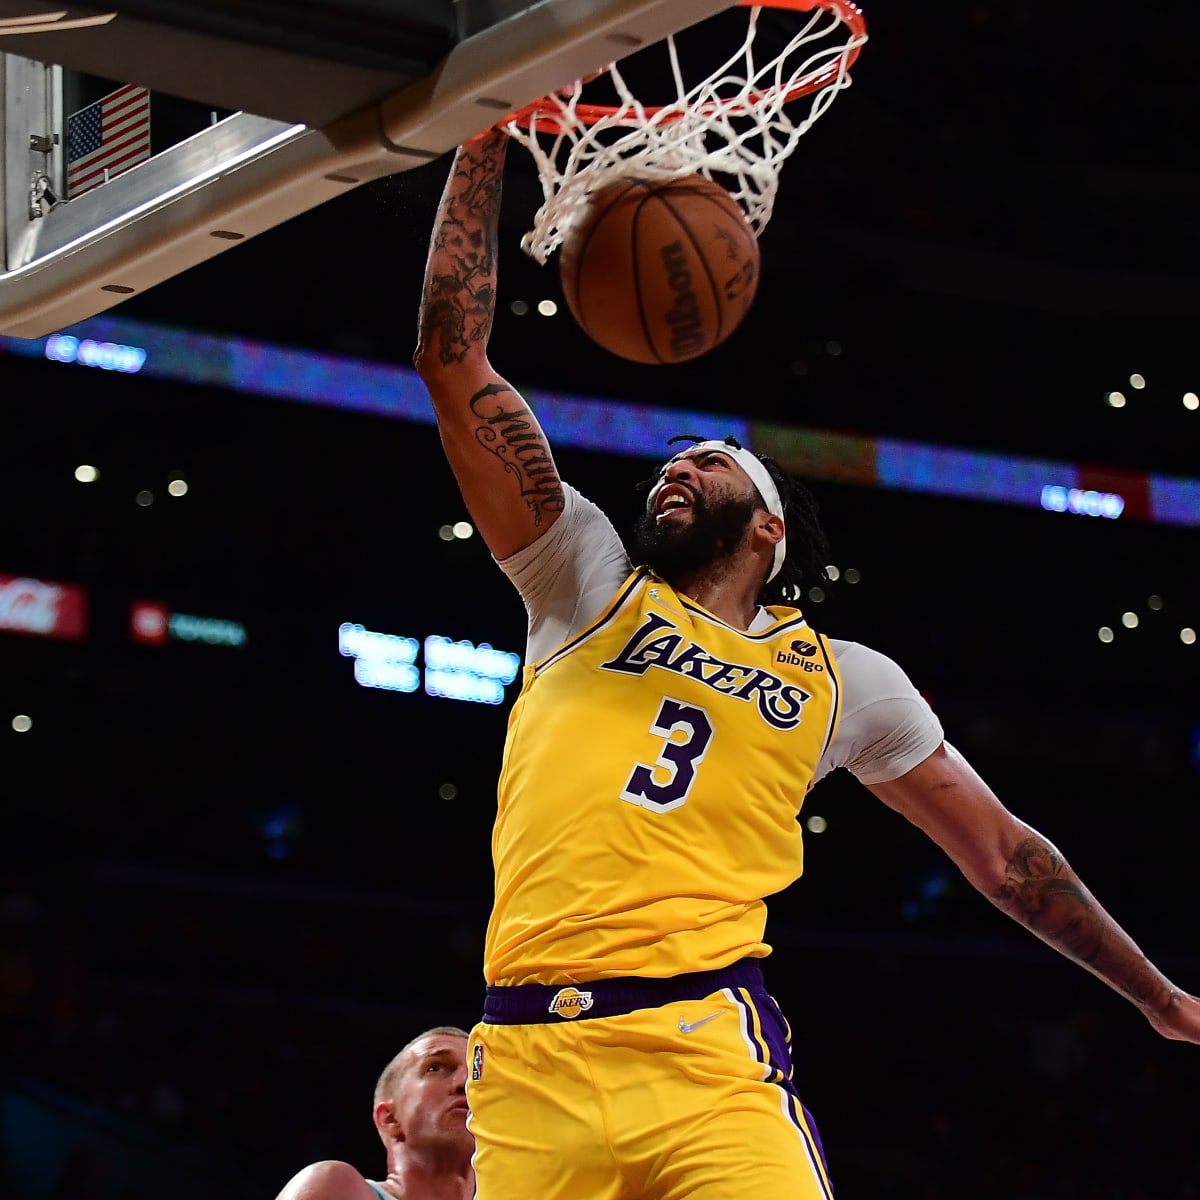 Sources: Lakers' Anthony Davis ramping up rehab, eyeing return - ESPN